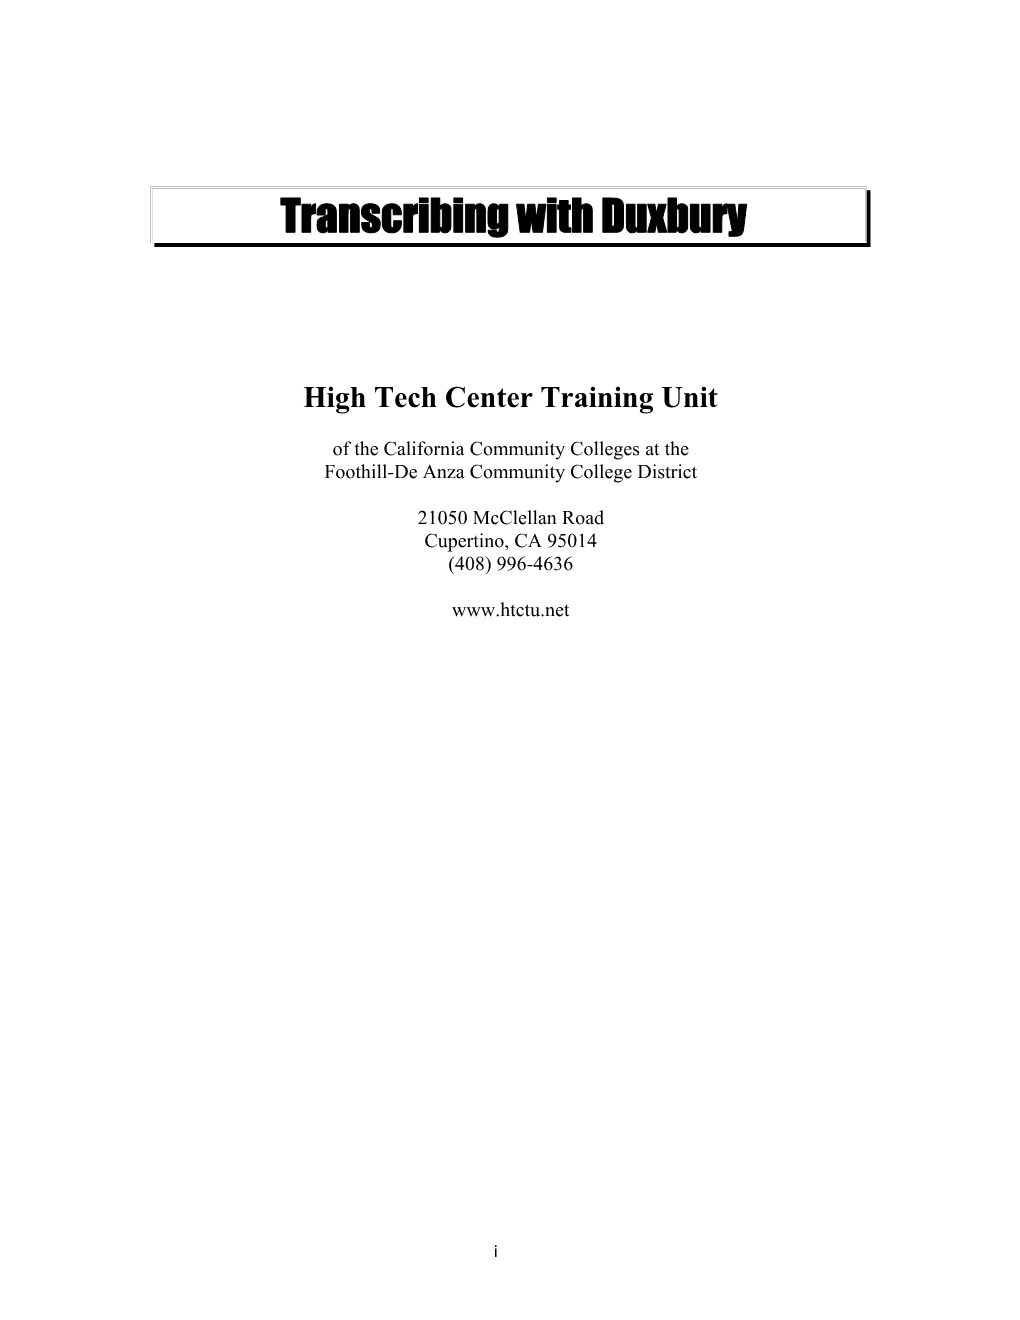 High Tech Center Training Unit